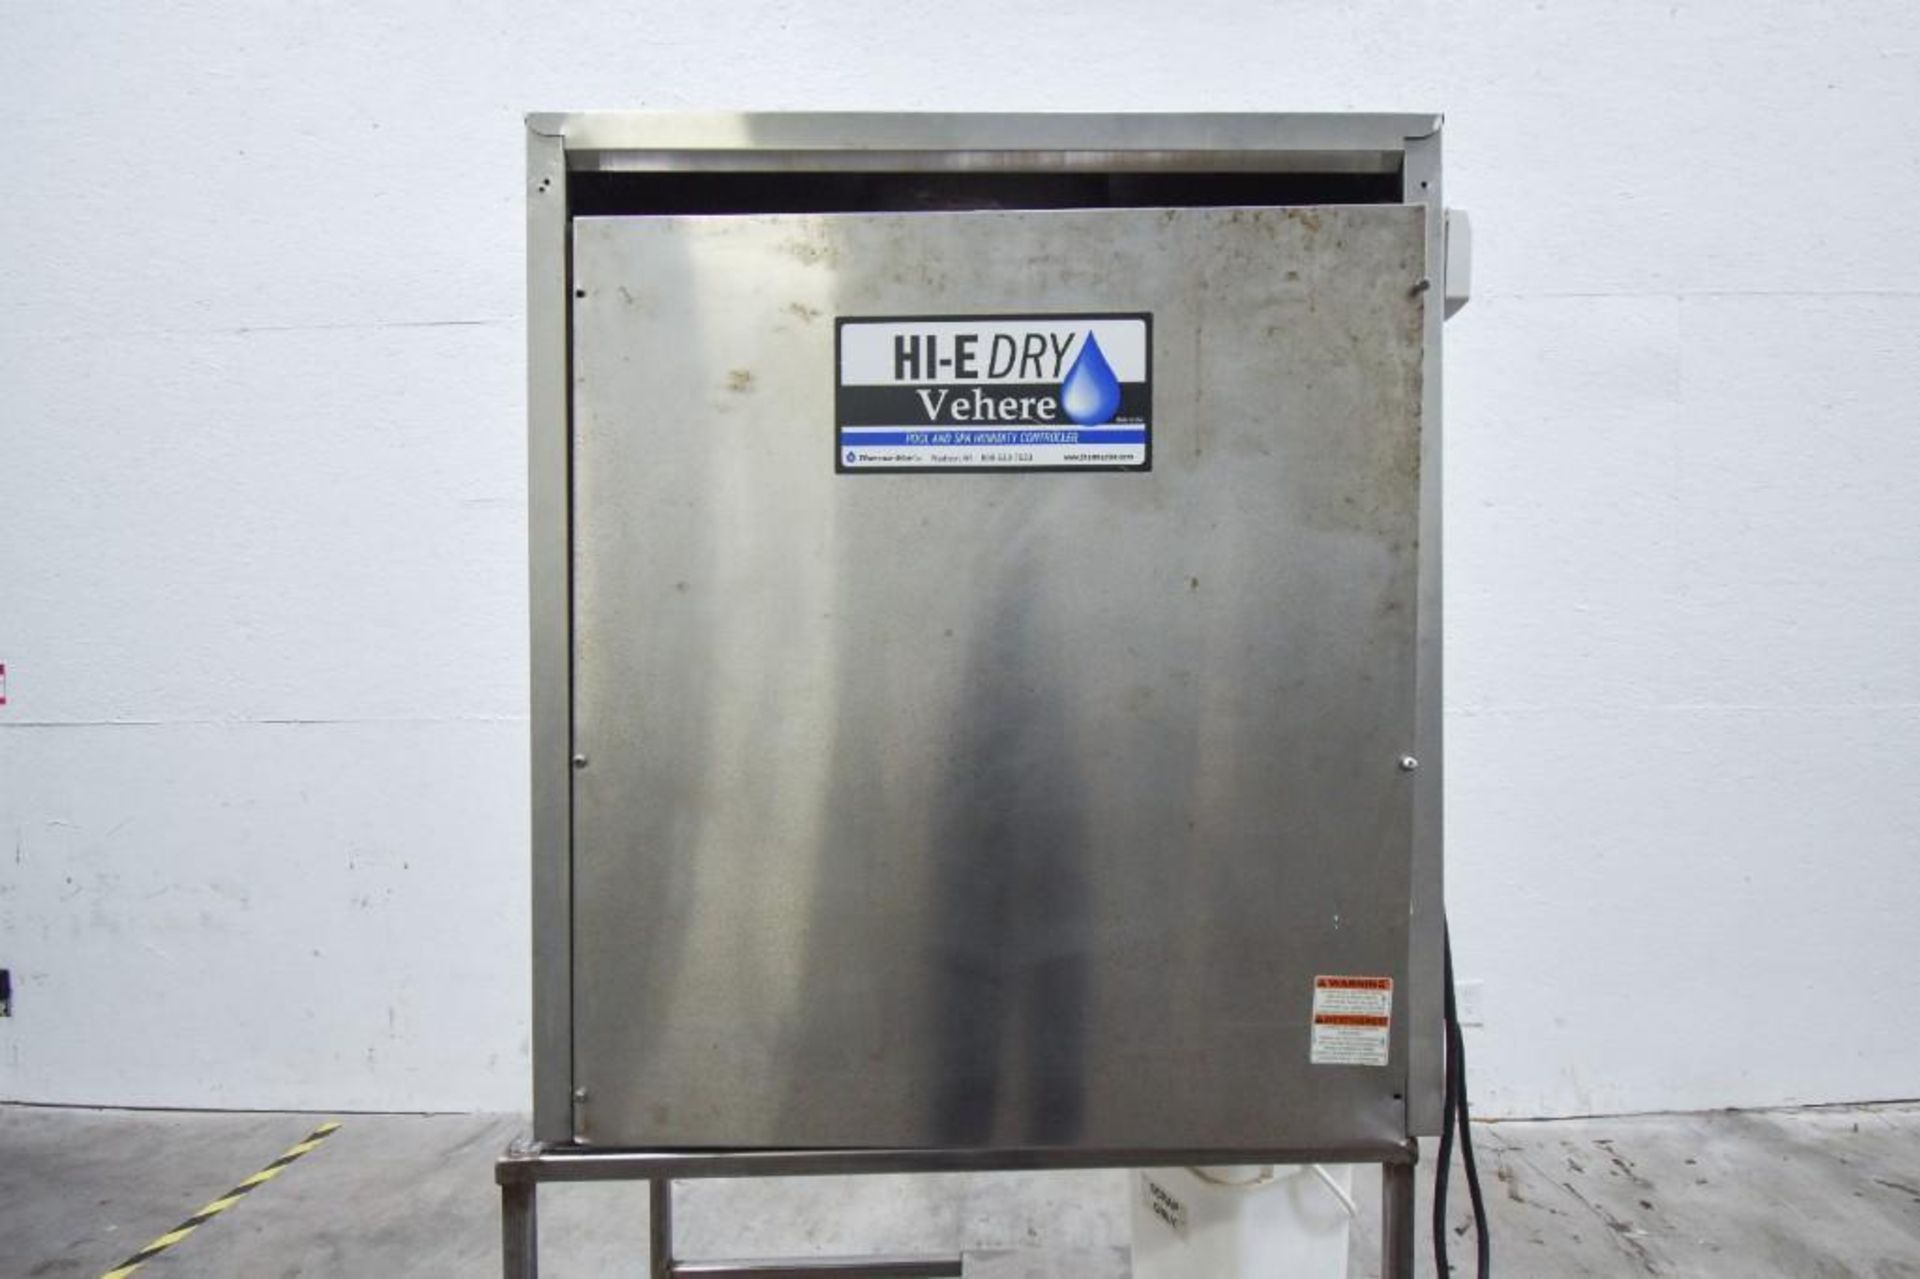 Hi-E Dry Vehere Thermastor - Image 2 of 3